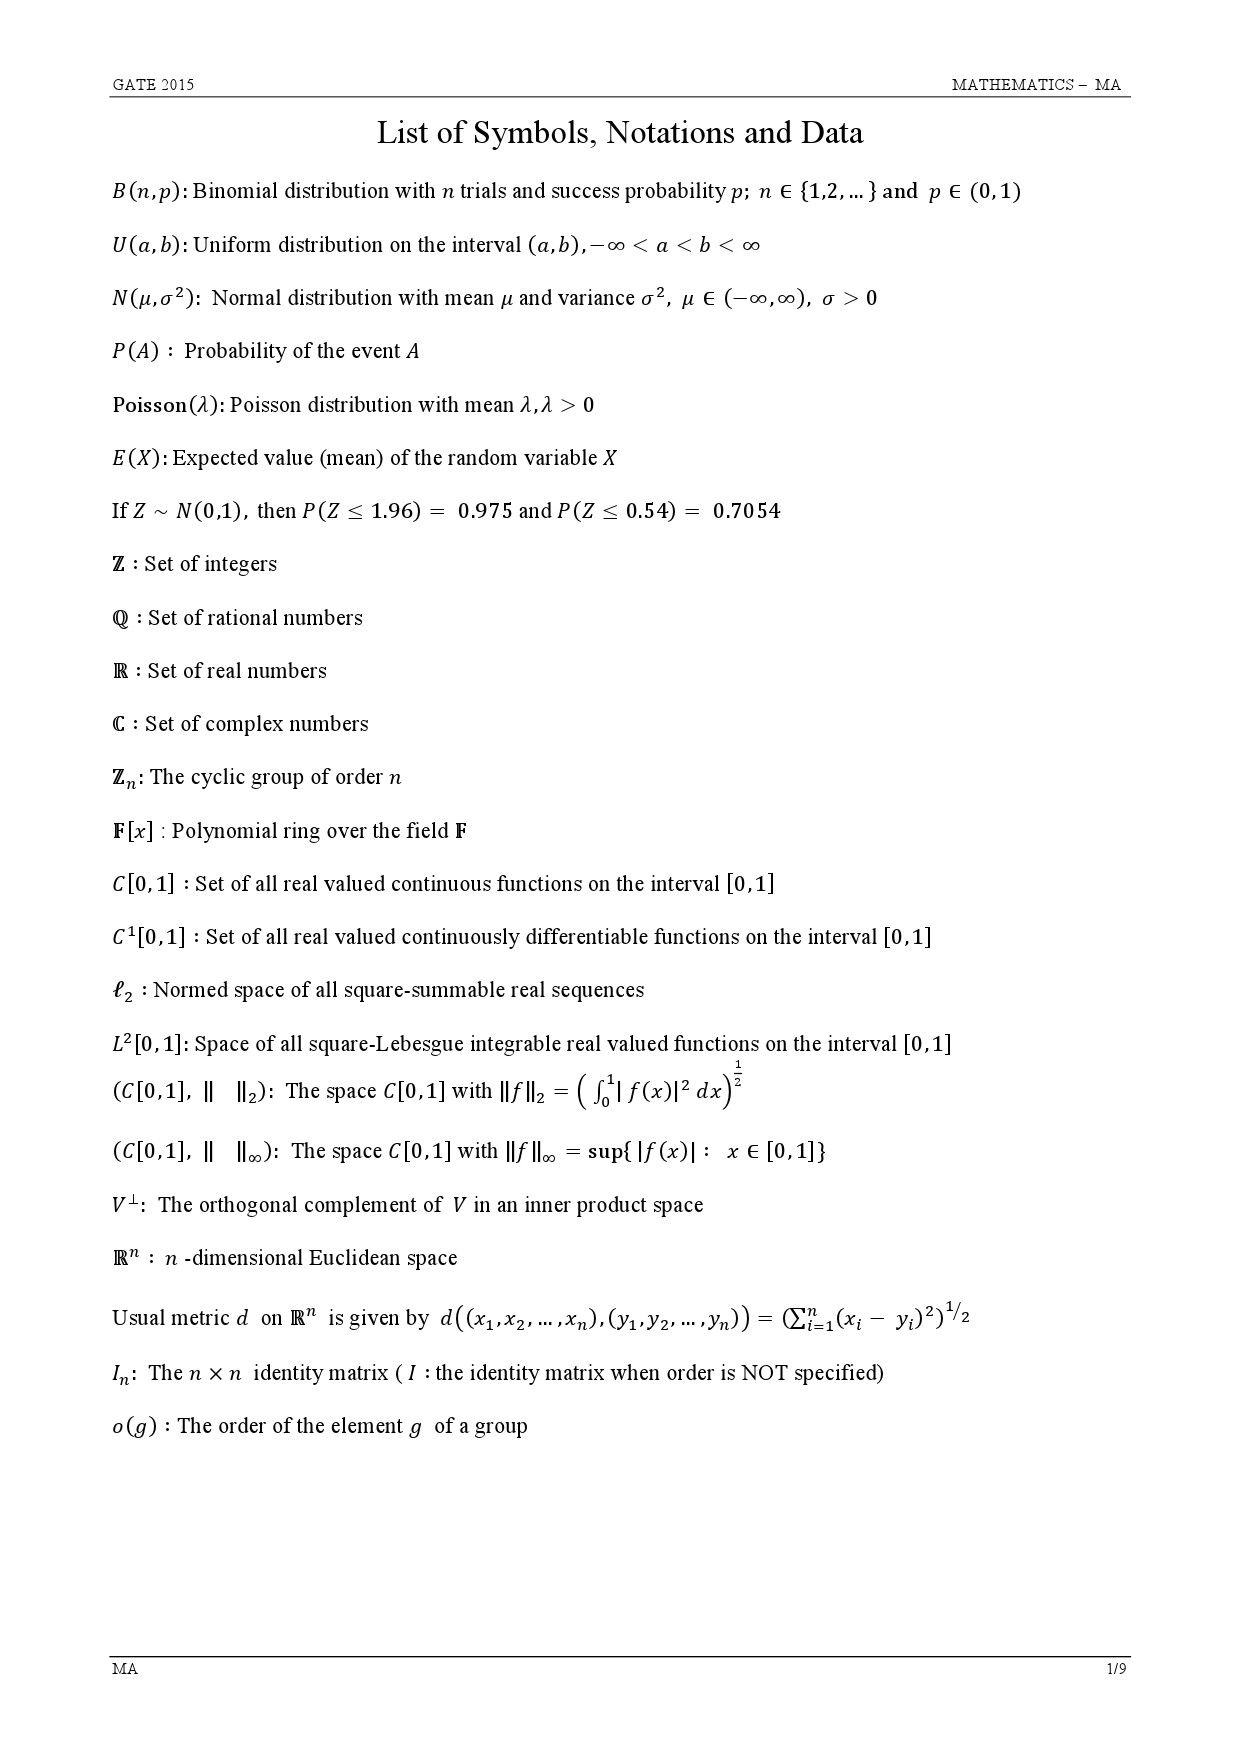 GATE Exam Question Paper 2015 Mathematics 1